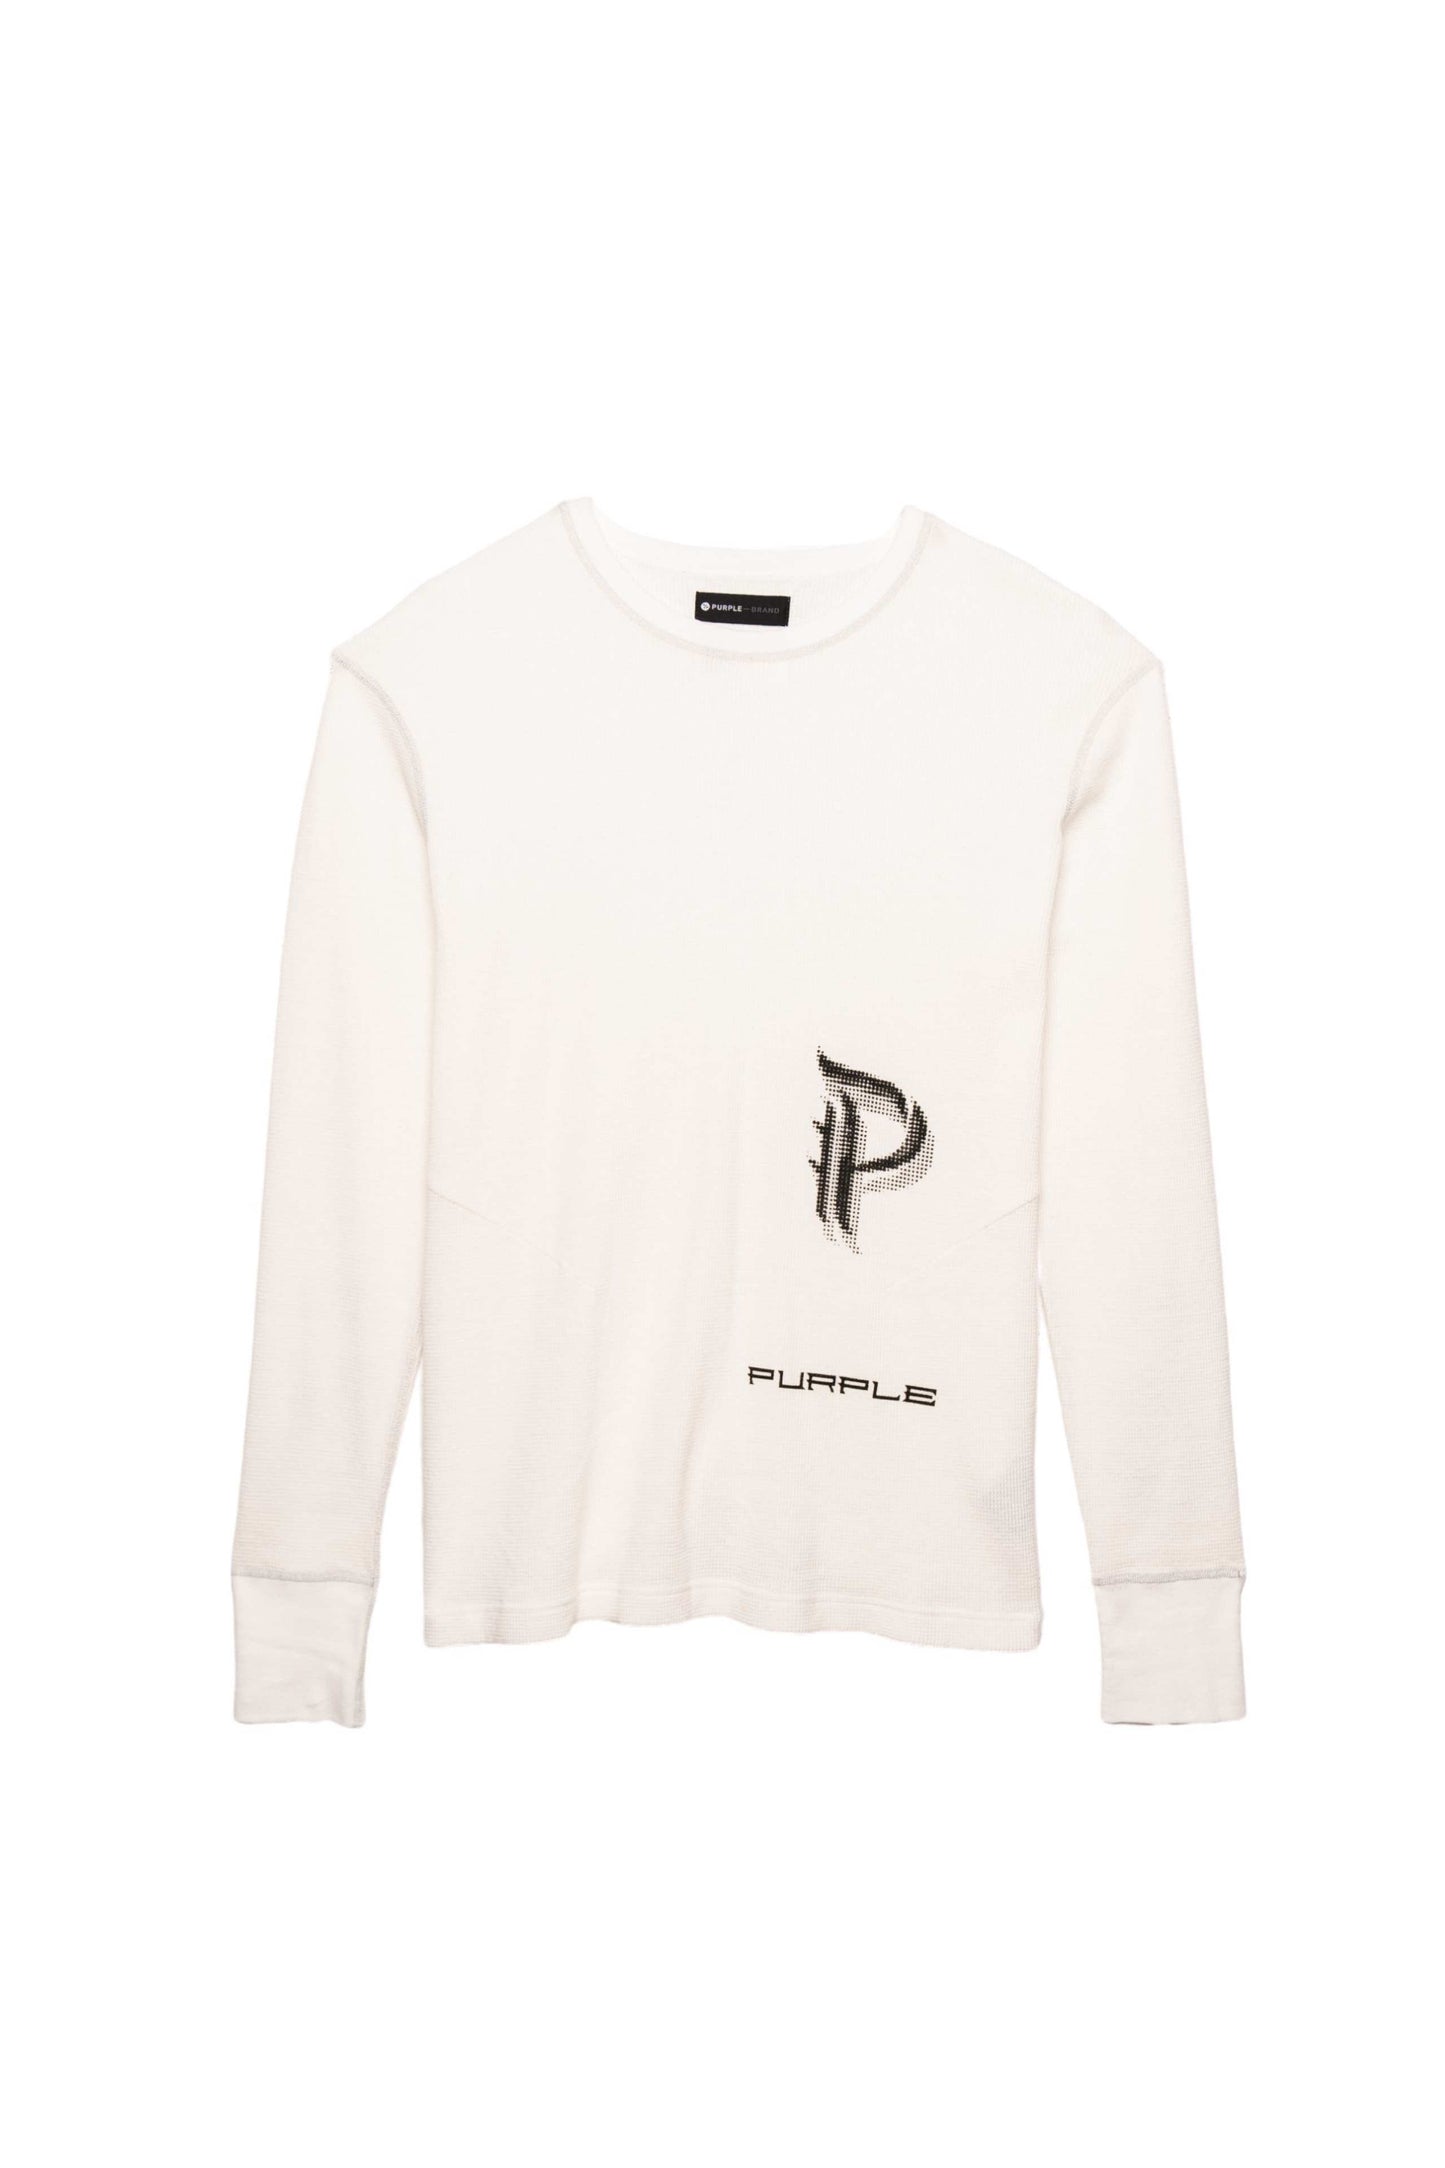 PURPLE BRAND - Long Sleeve Reflective Stitch Crew Shirt - Style No. P202 - Off White Scorpion - Front